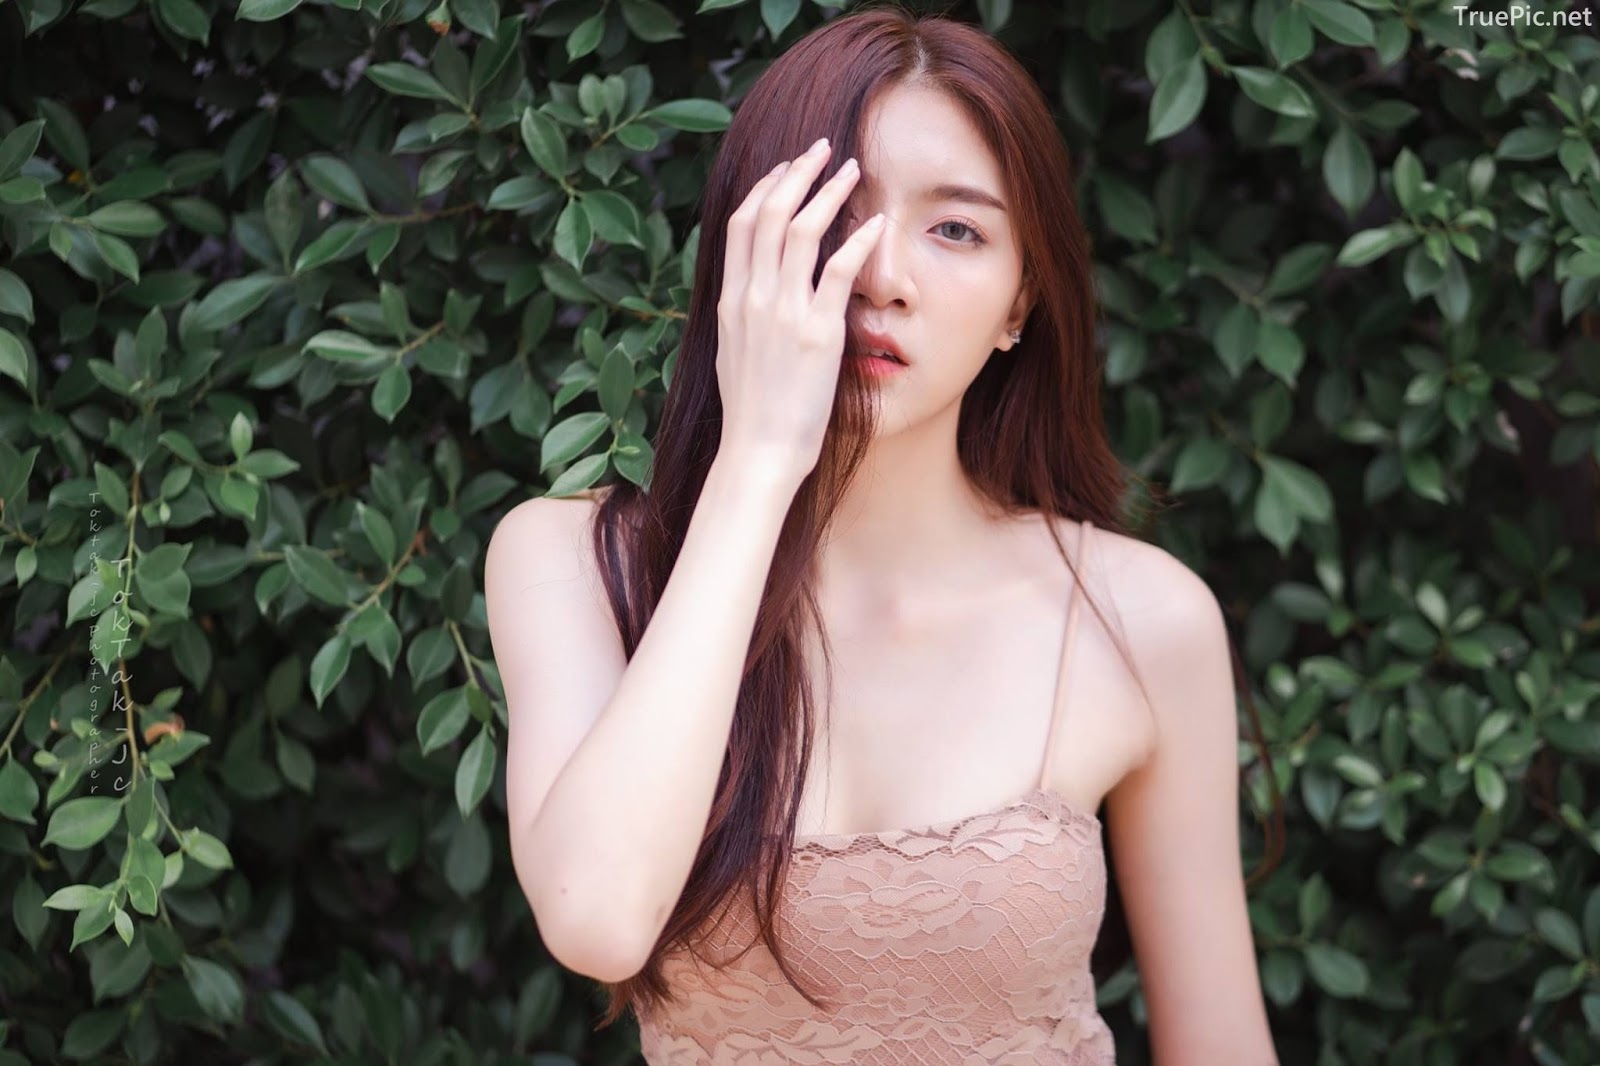 Thailand angel model Sasi Ngiunwan - Beauty portrait photoshoot - Picture 11